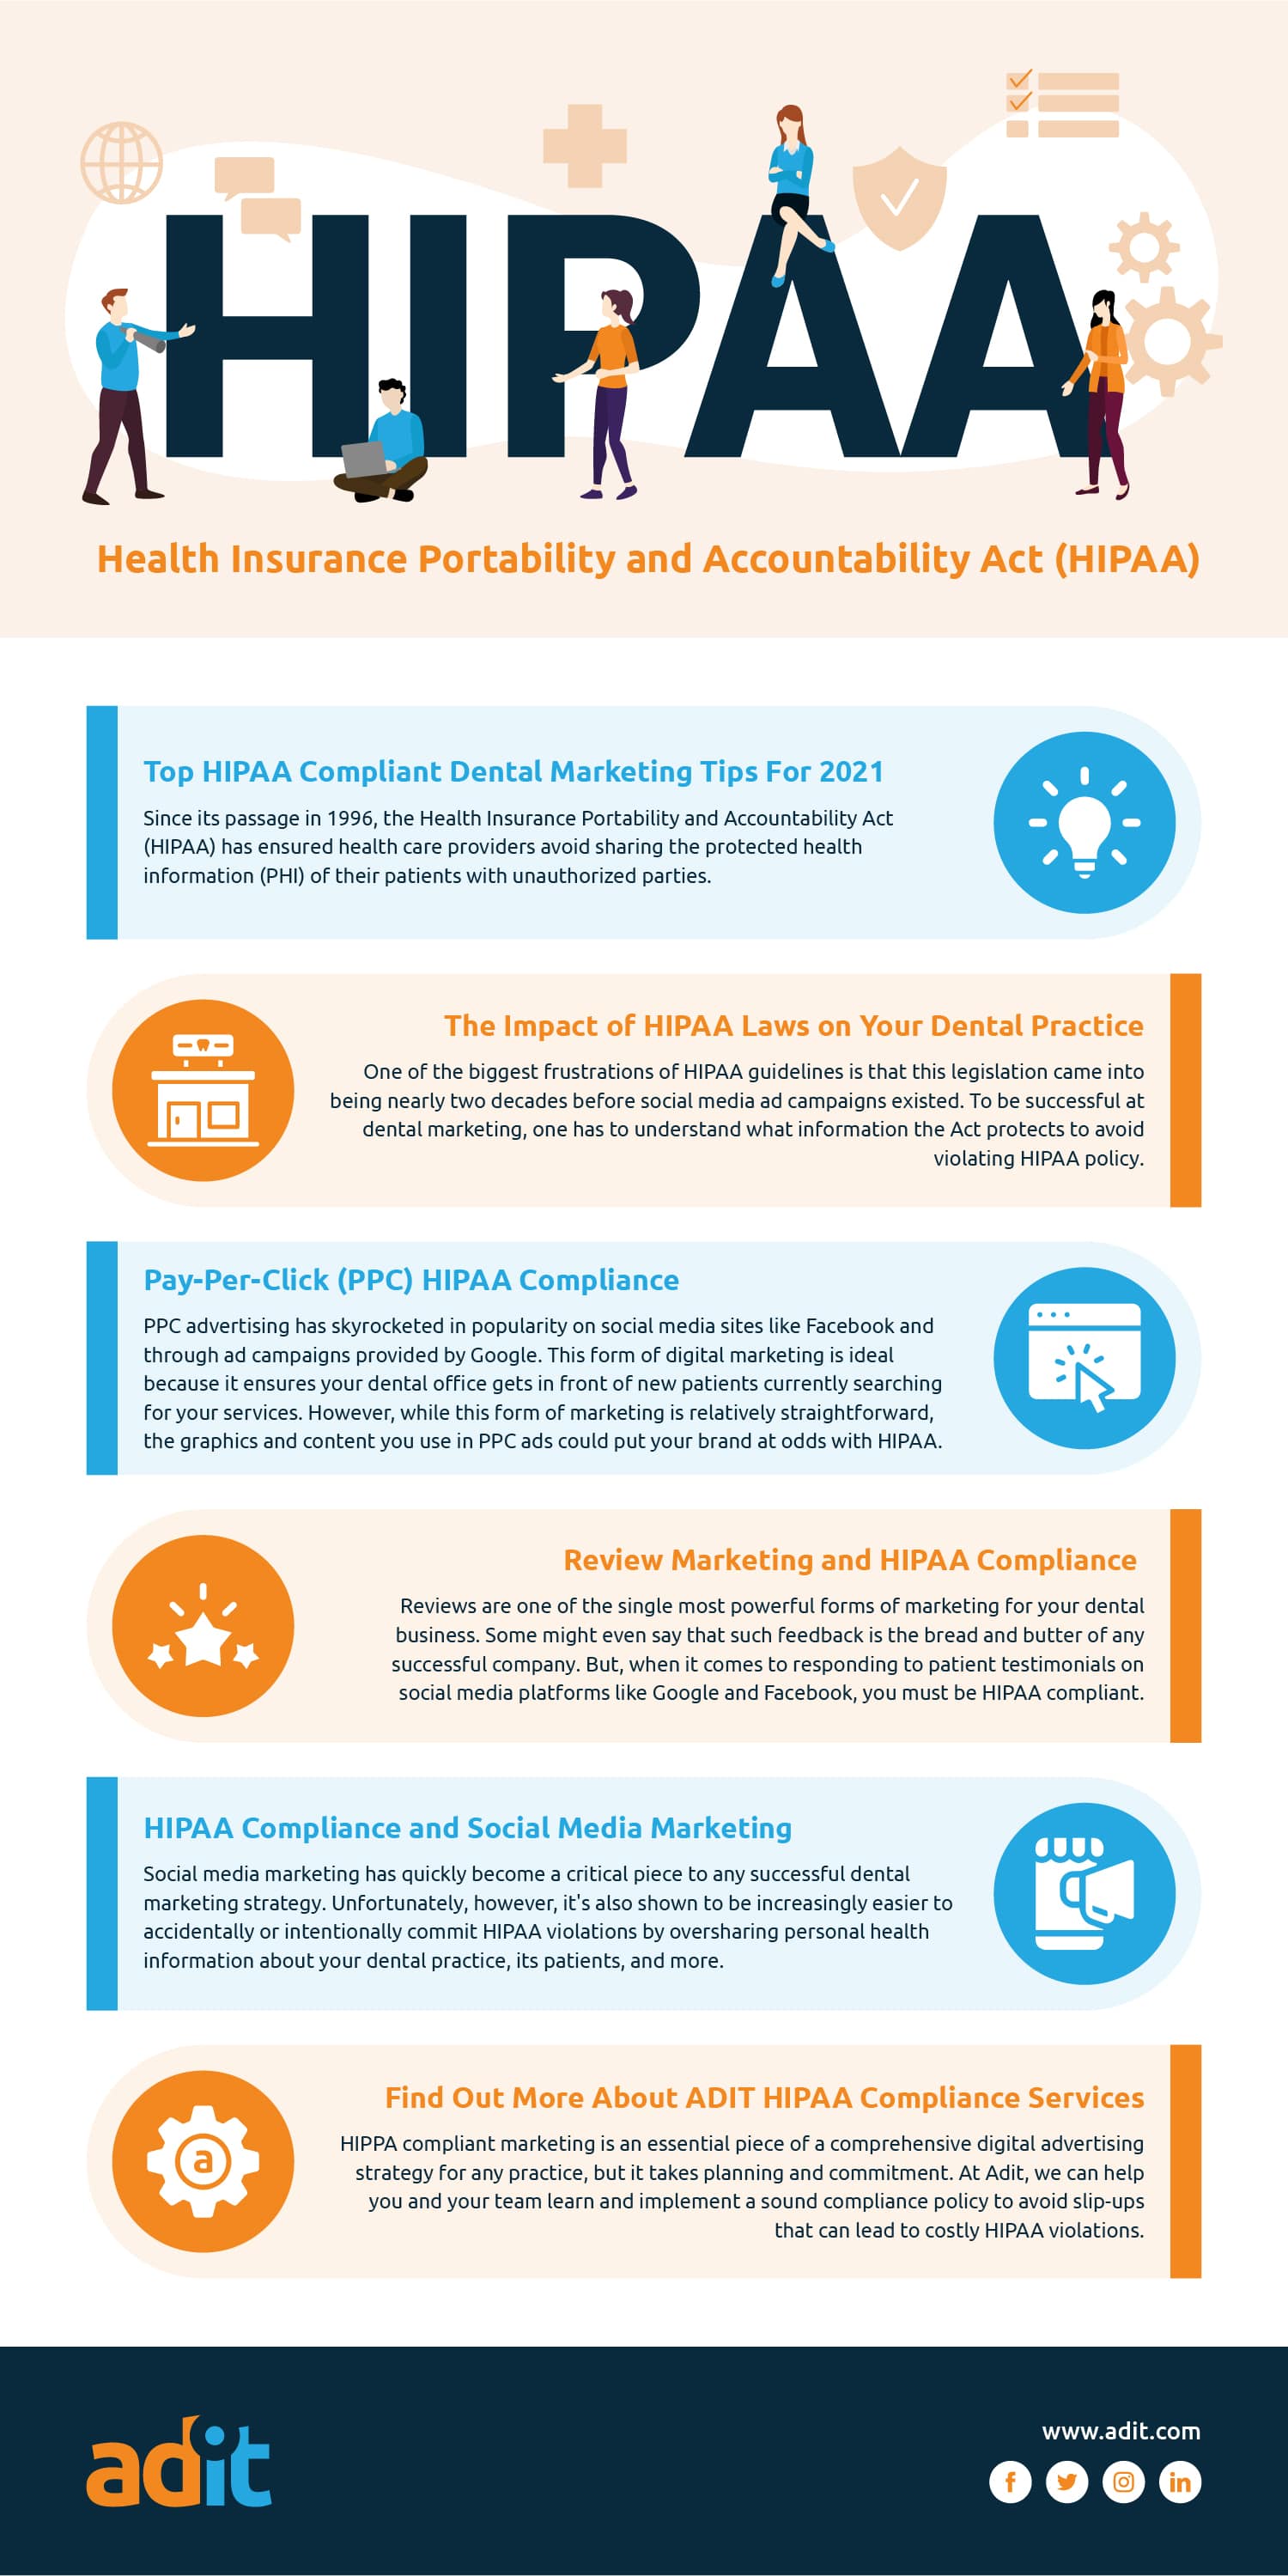 Top HIPAA Compliant Dental Marketing Tips For 2021